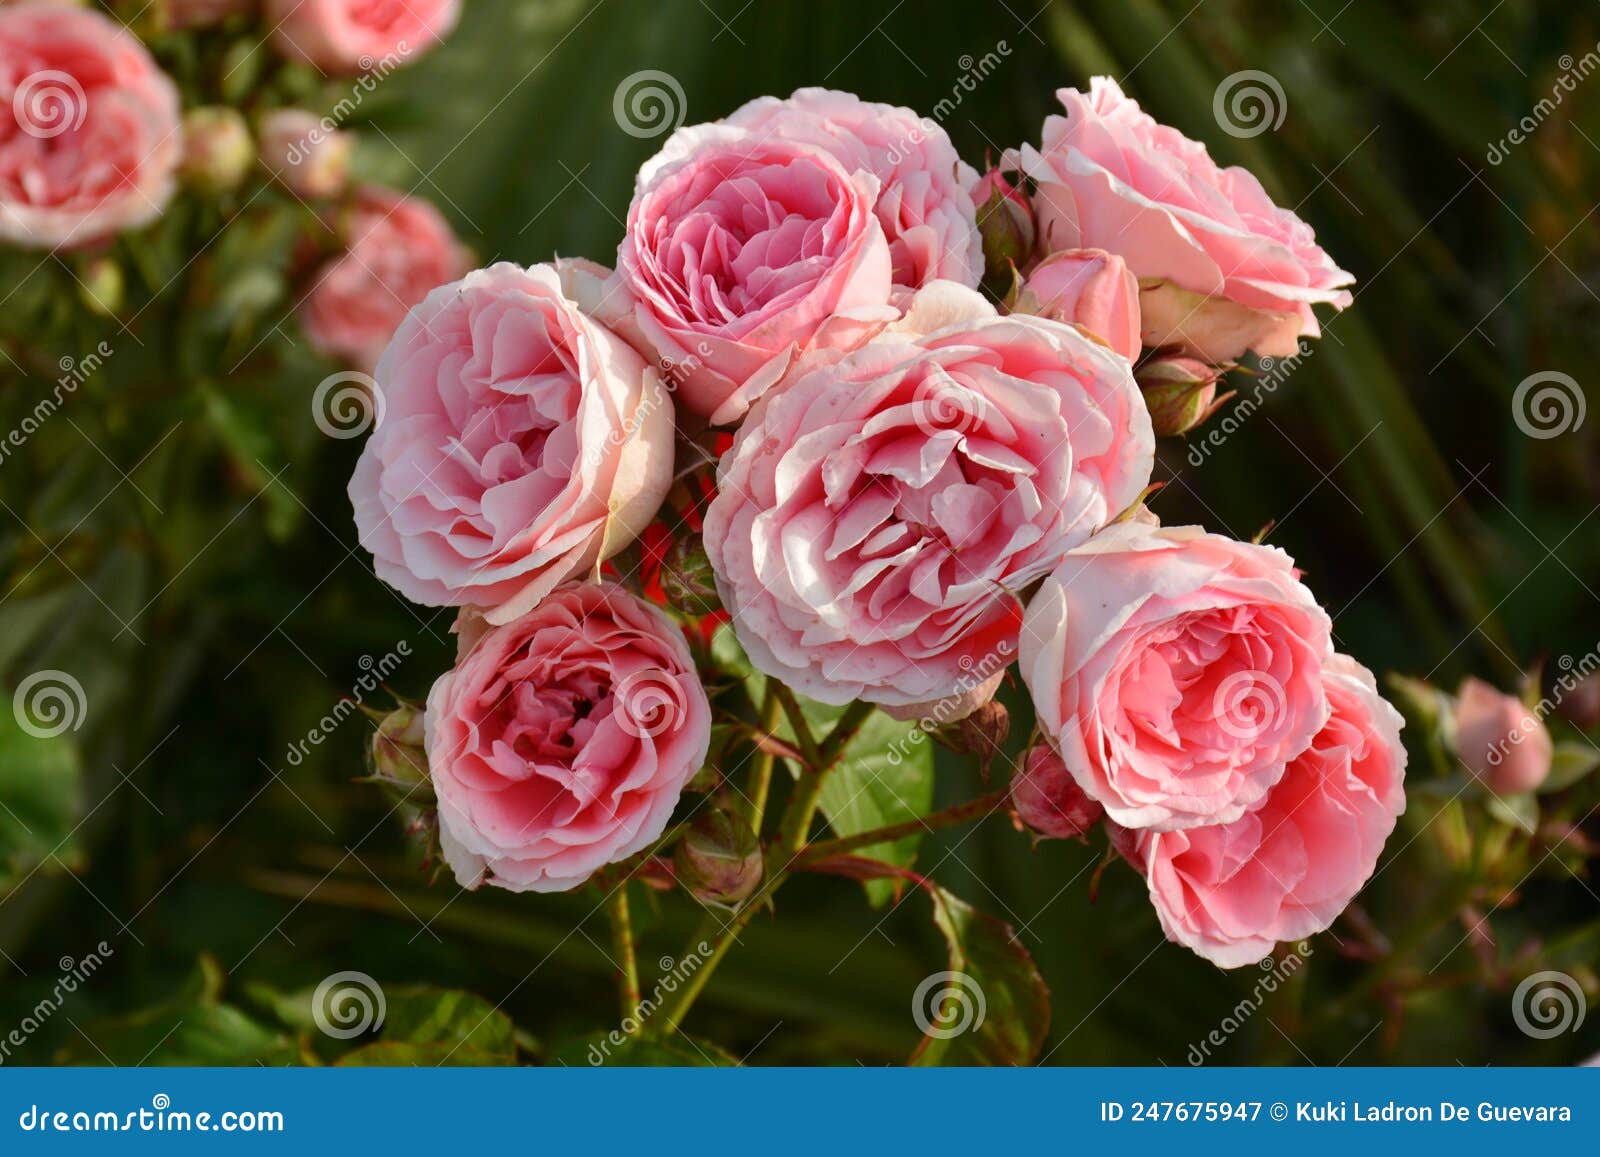 pink roses on a rosebush in a garden